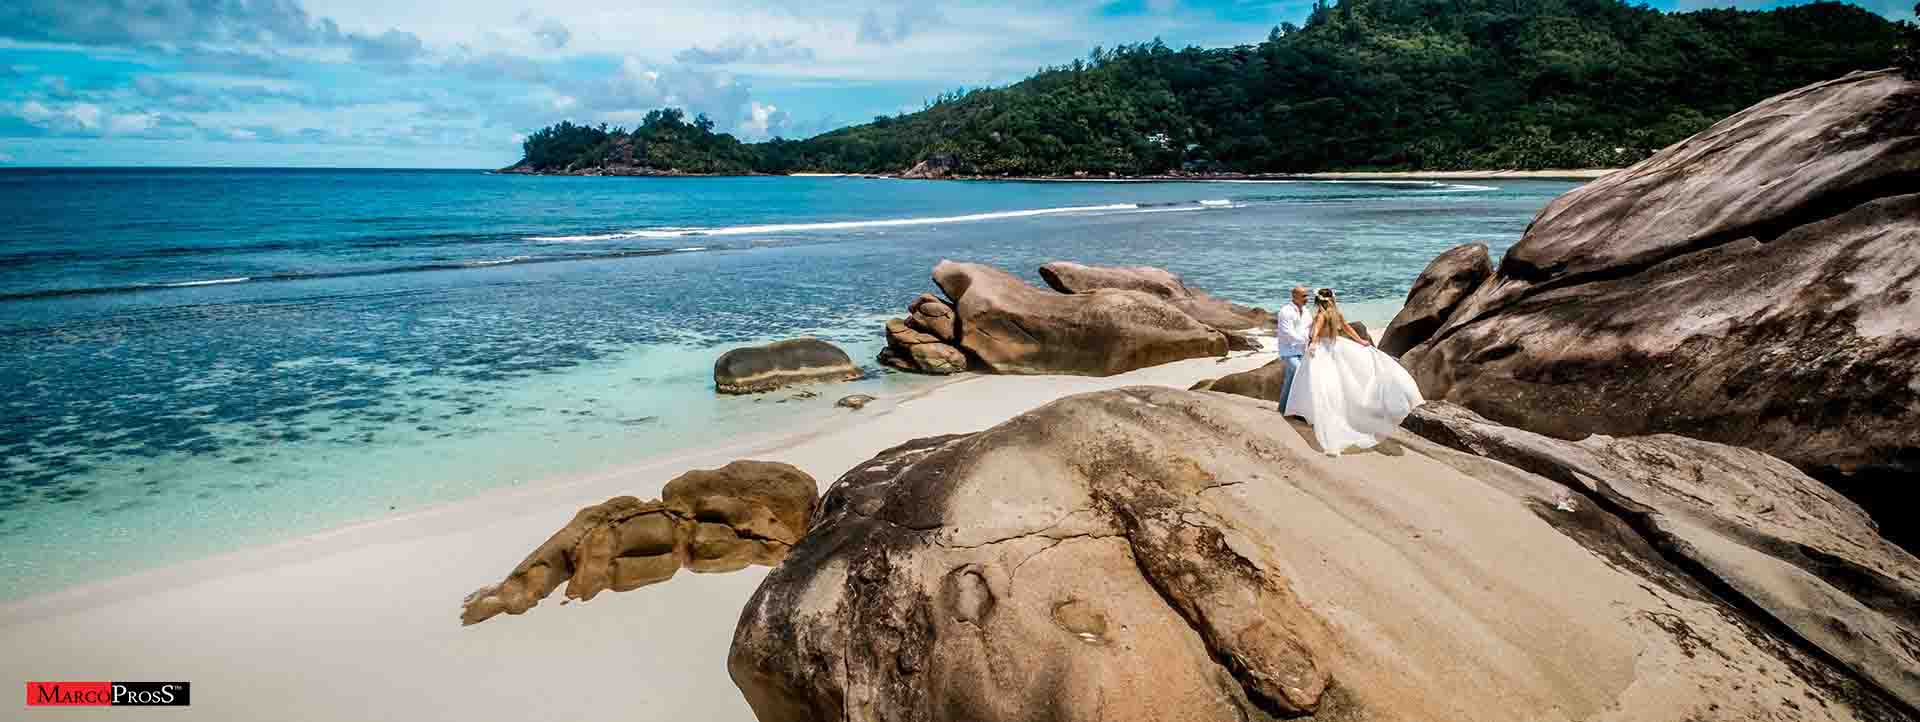 wedding in seyschelles - wedding couple on a beach stone